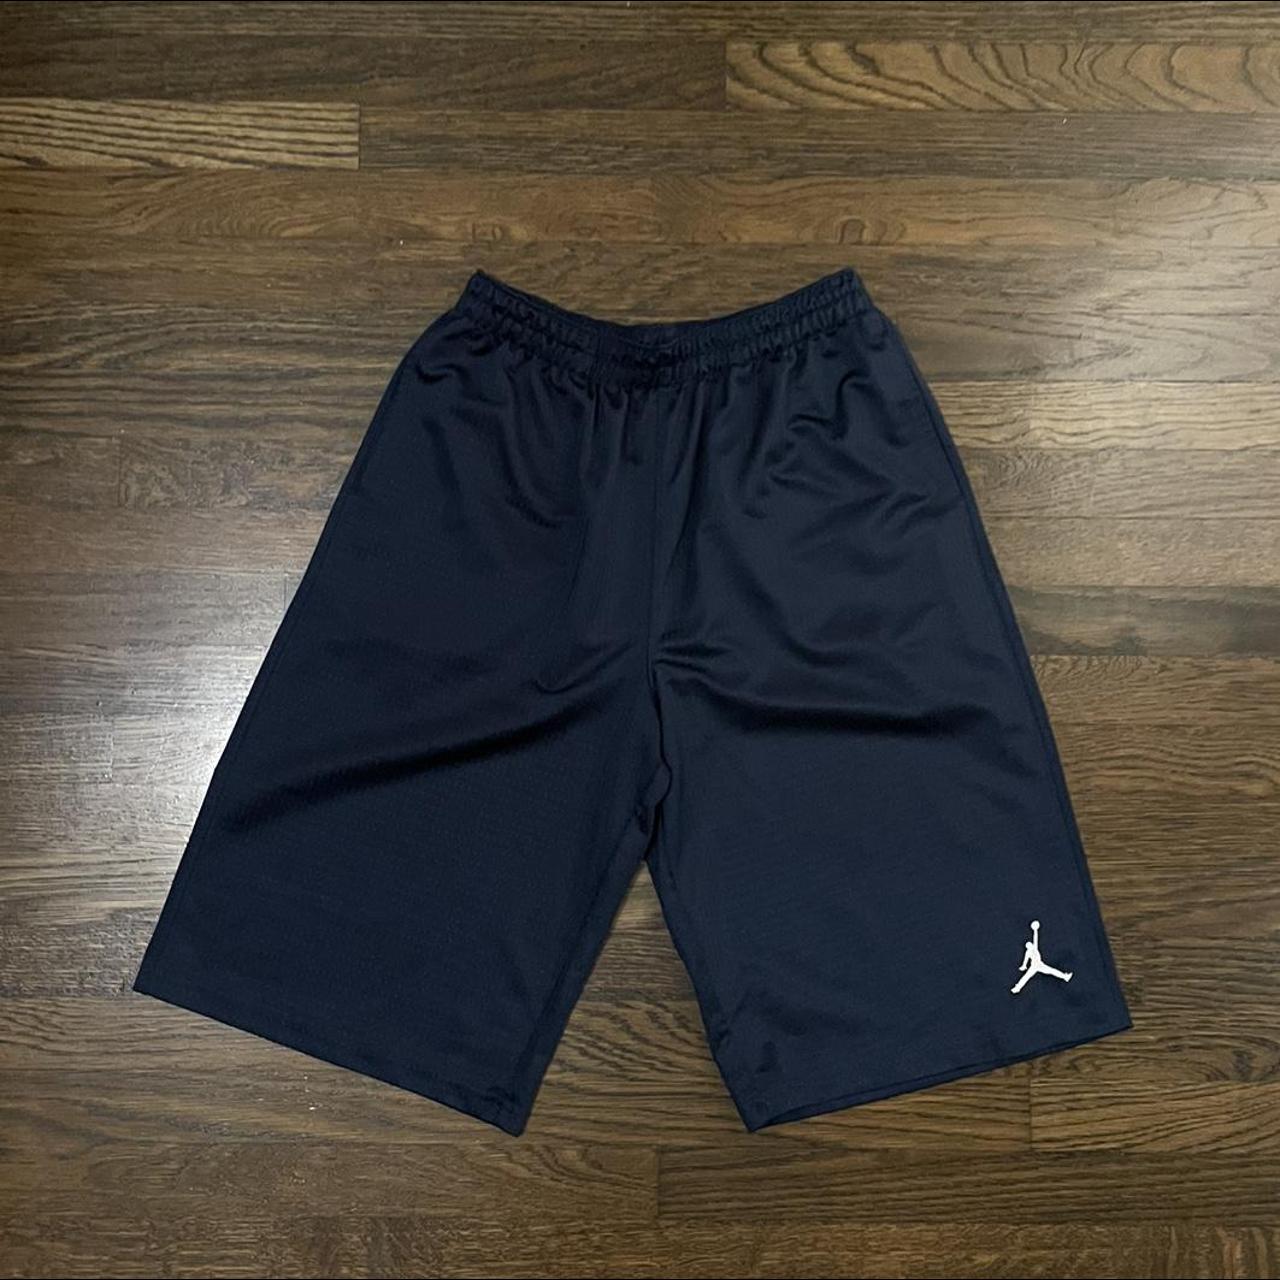 Jordan Men's Shorts - Navy - S